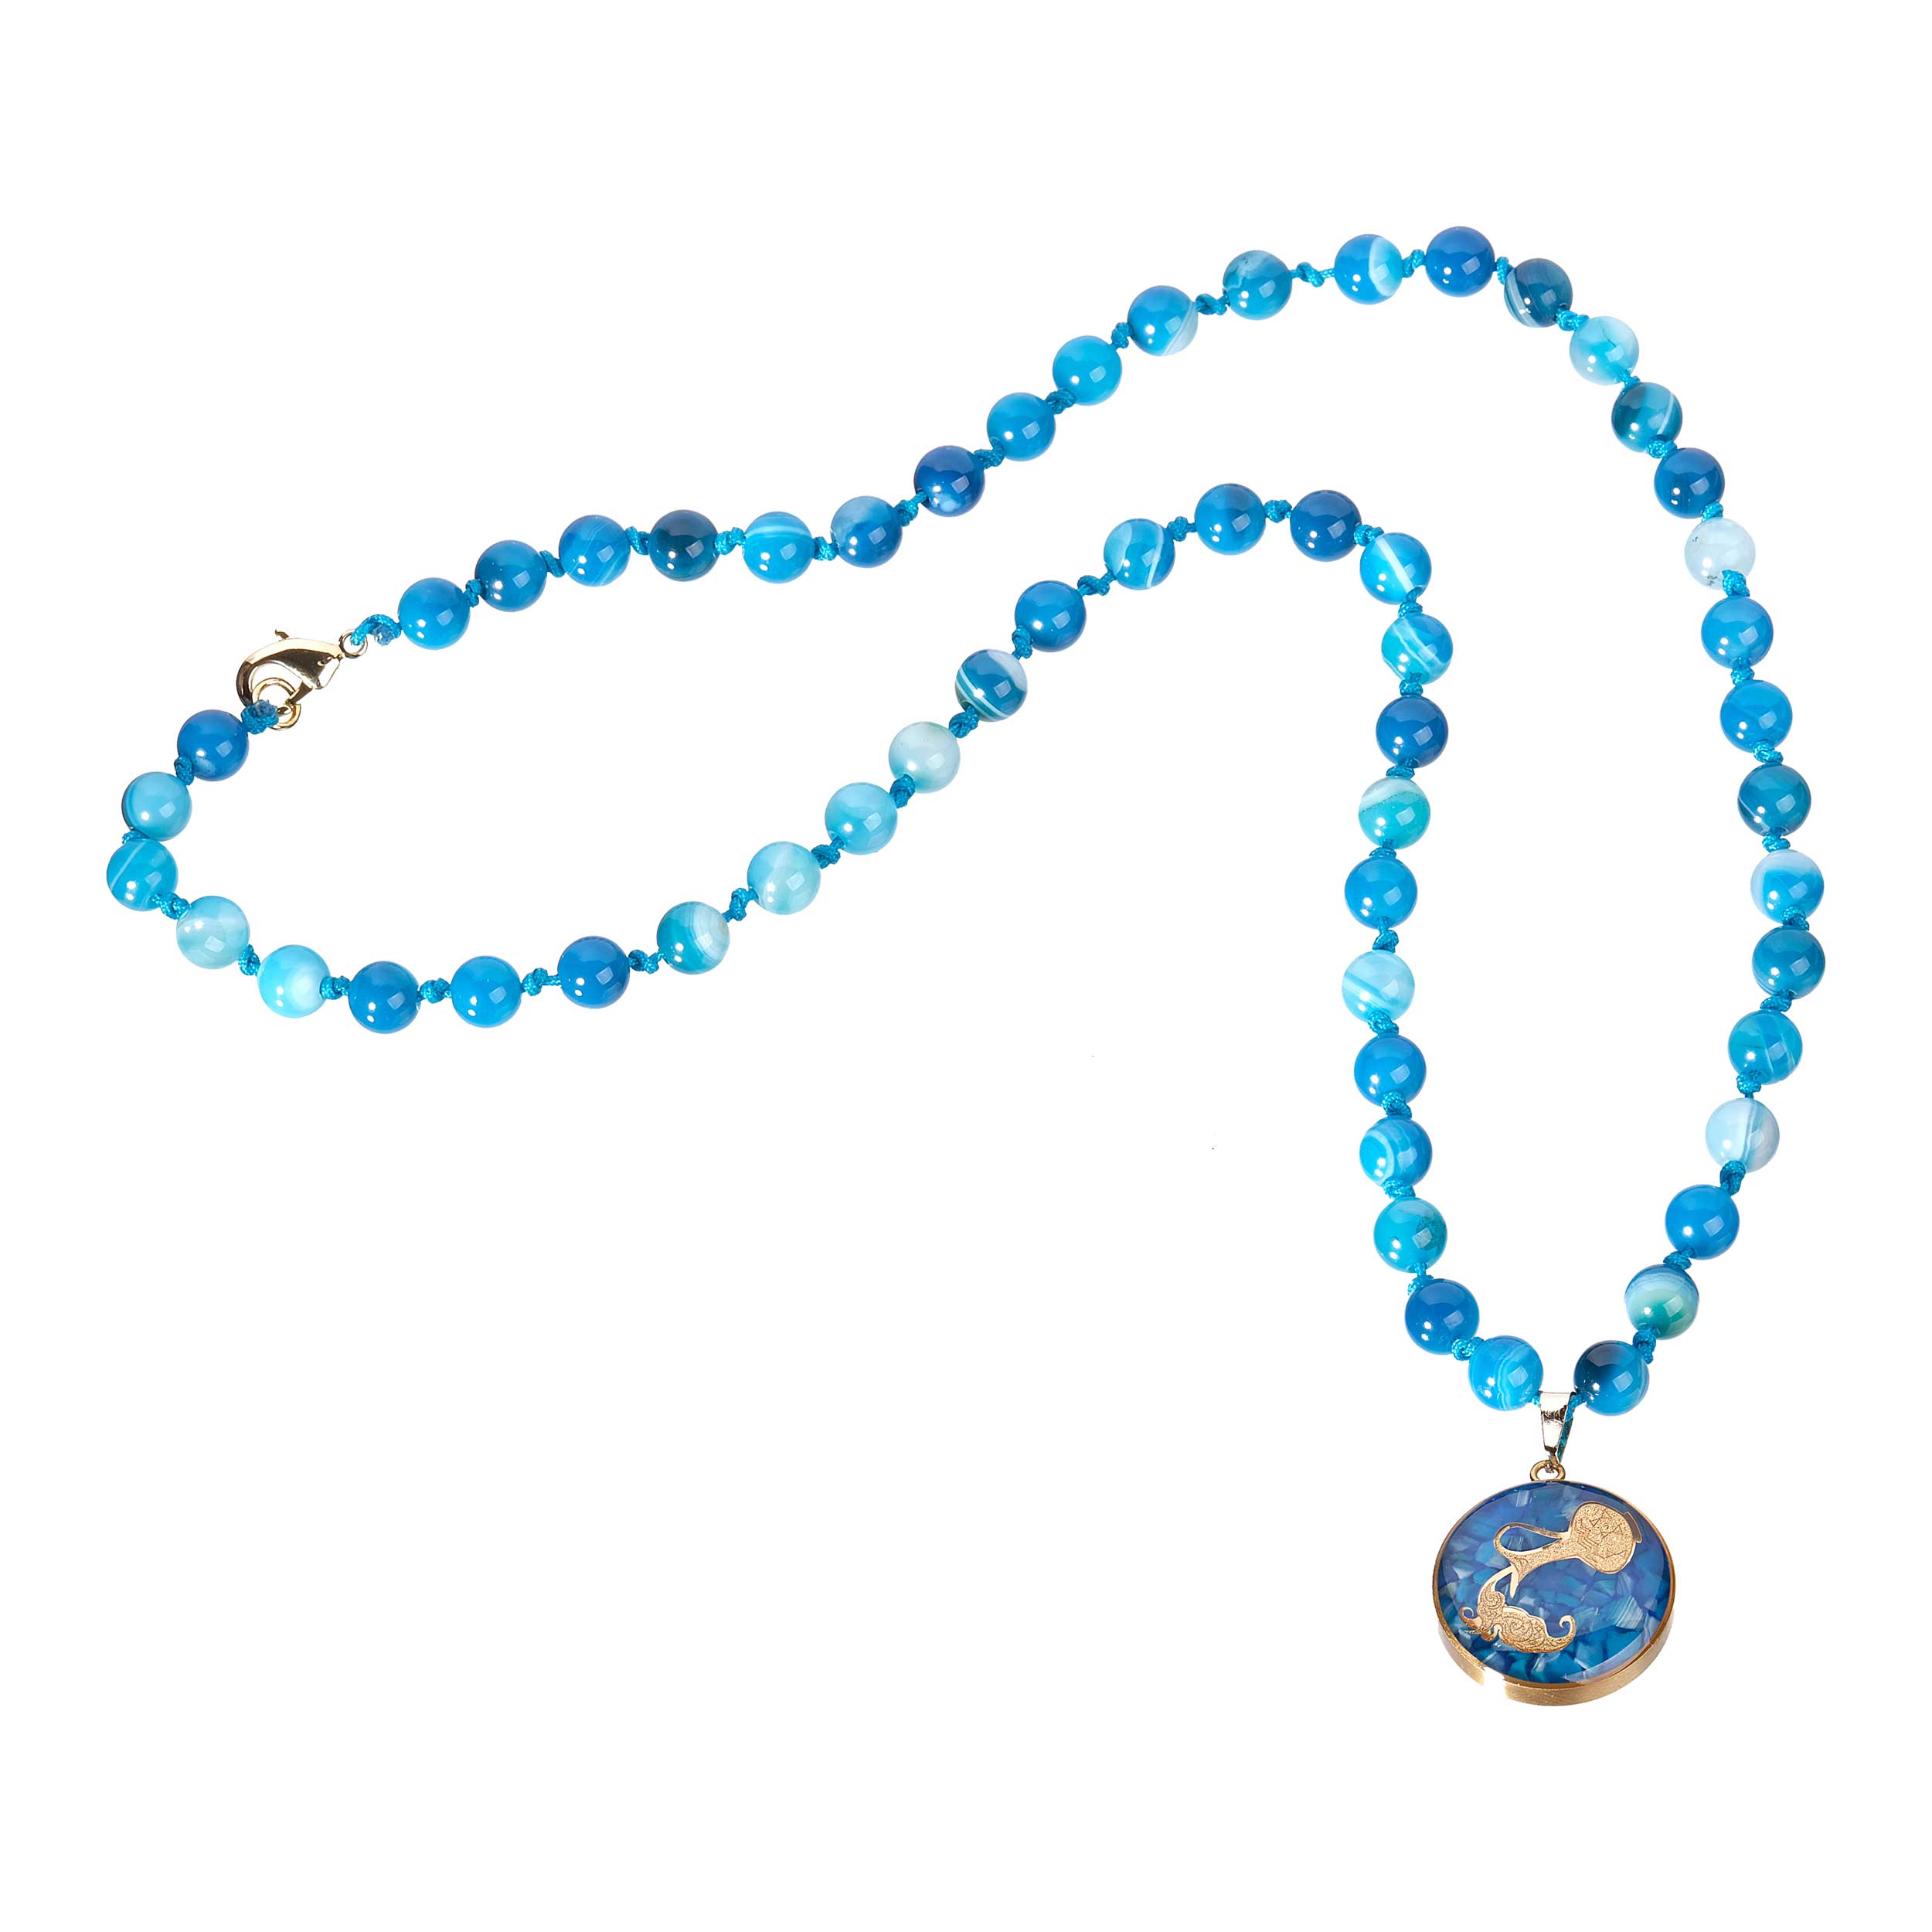 Blue agate necklace and 24 carat gold leaf with Bahman symbol design